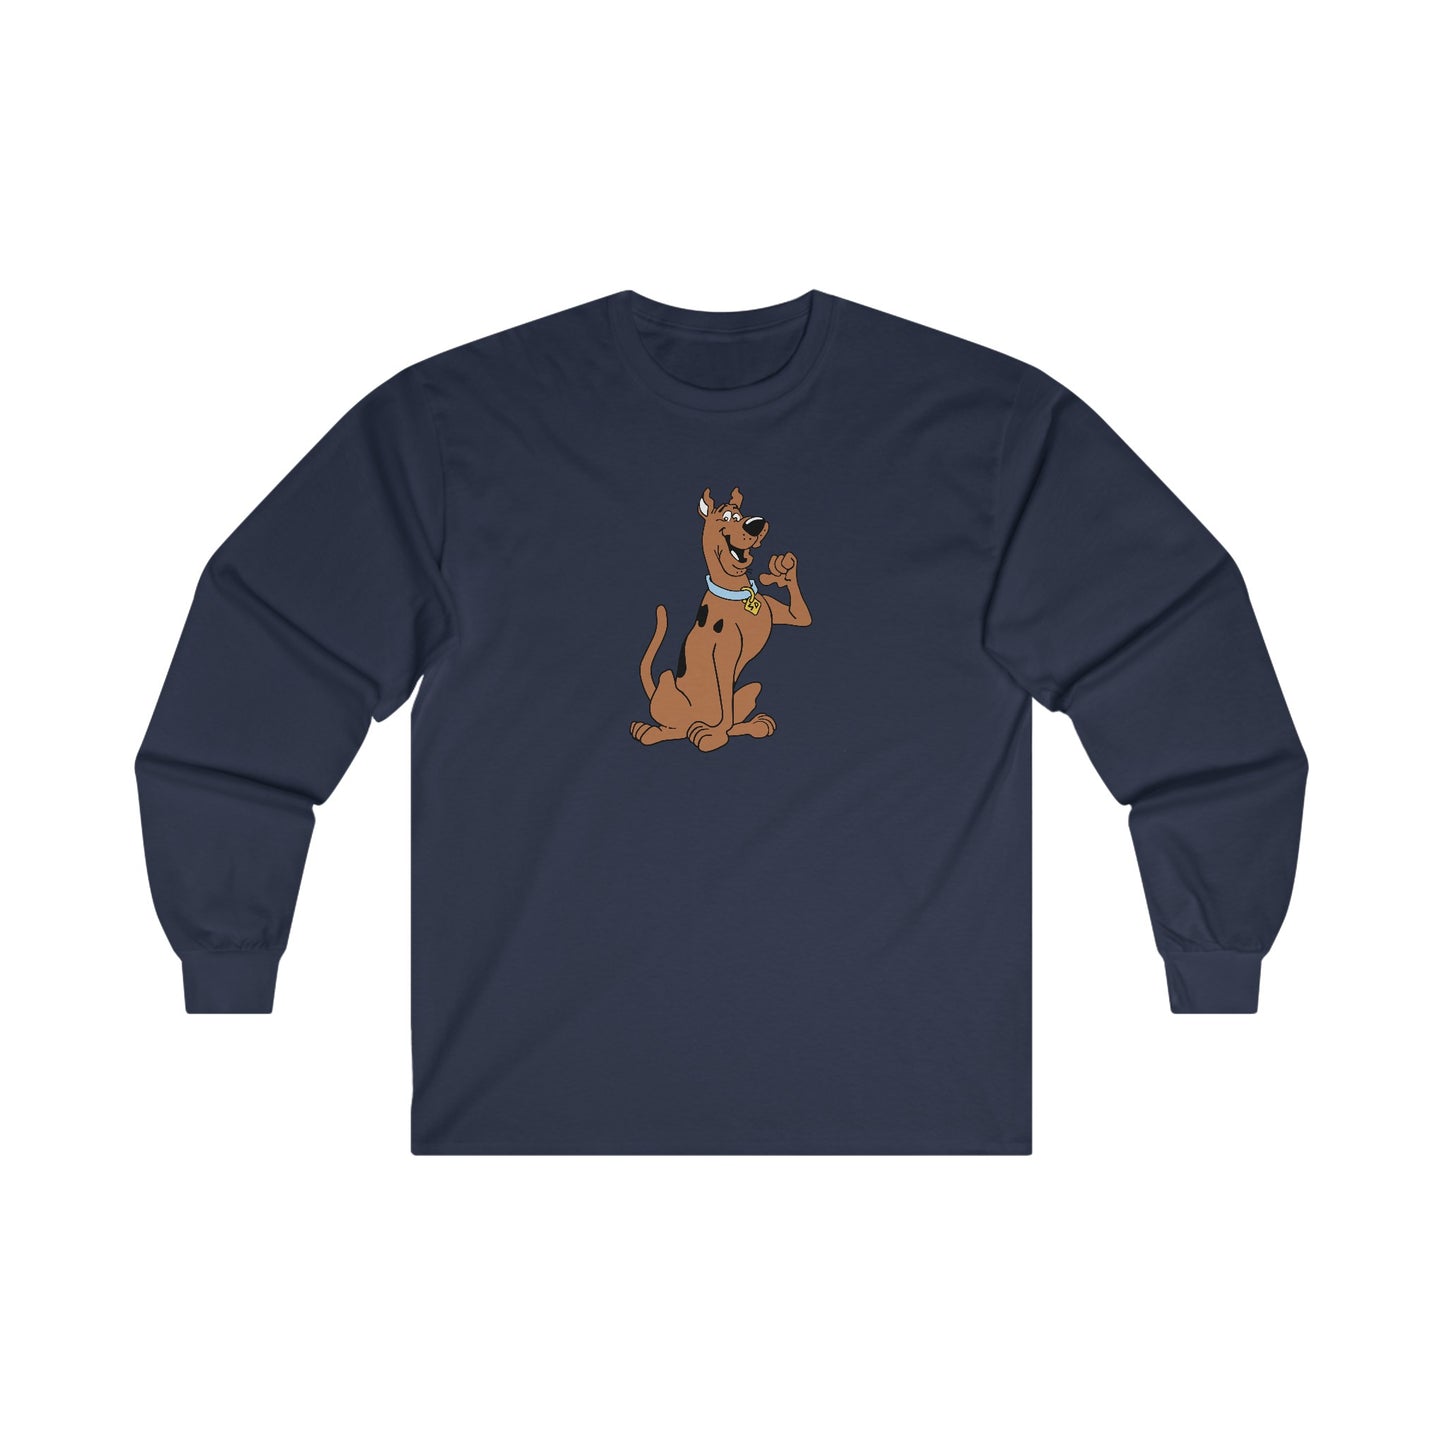 Scooby Doo Long Sleeve T-Shirt